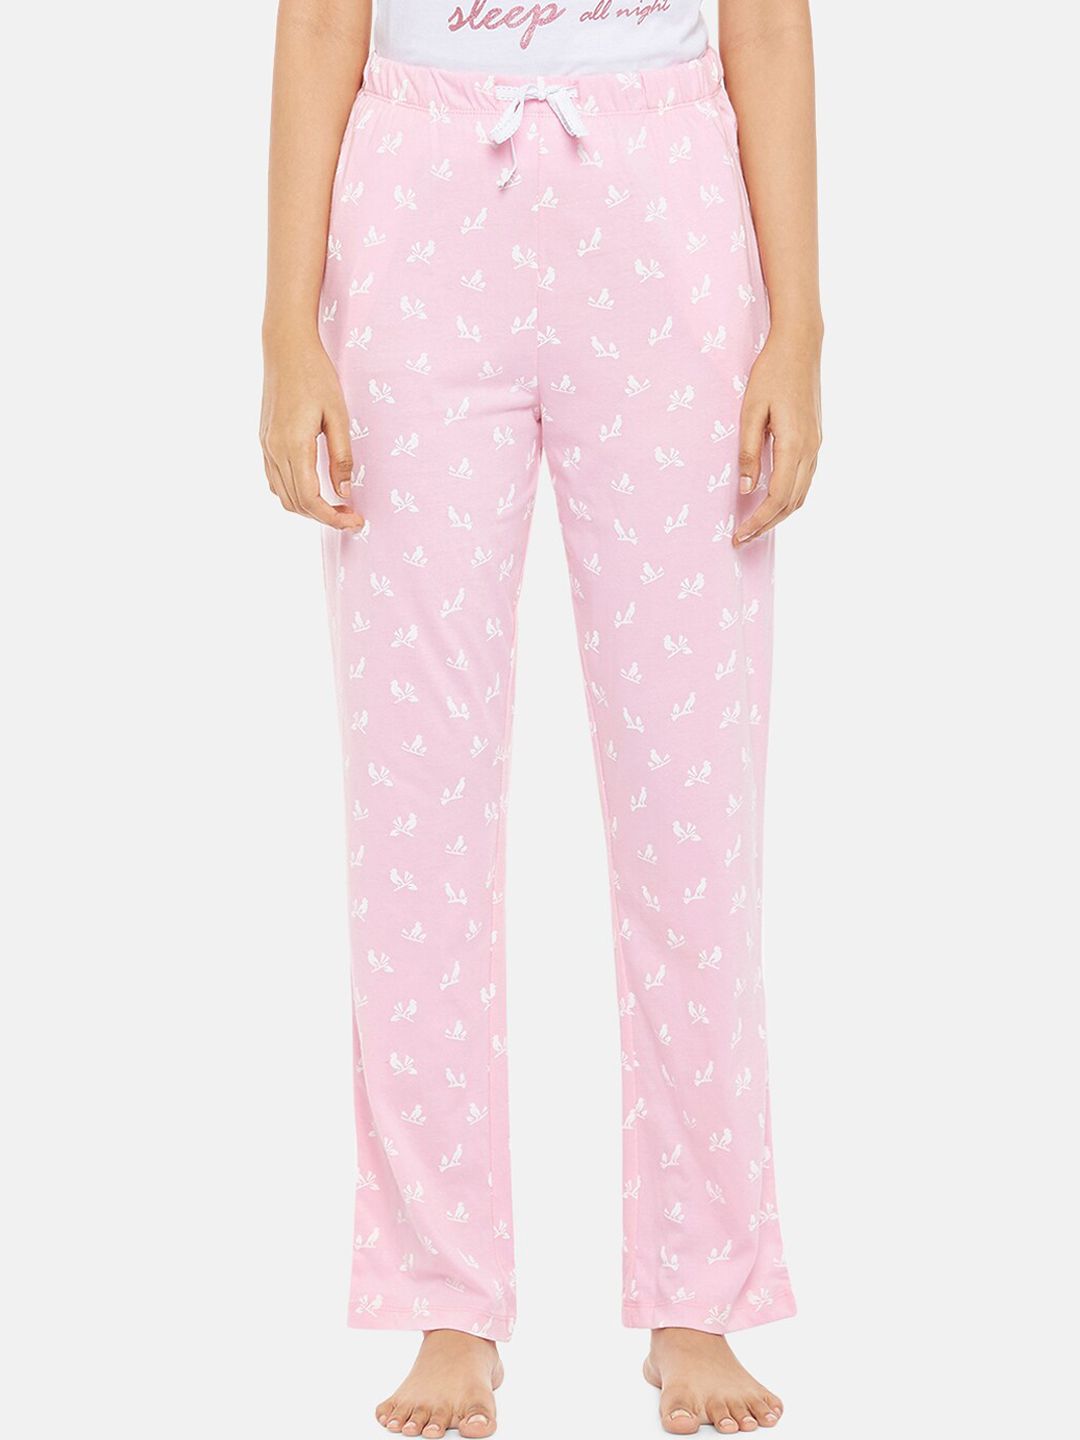 Dreamz by Pantaloons Women Pink Printed Lounge Pants Price in India